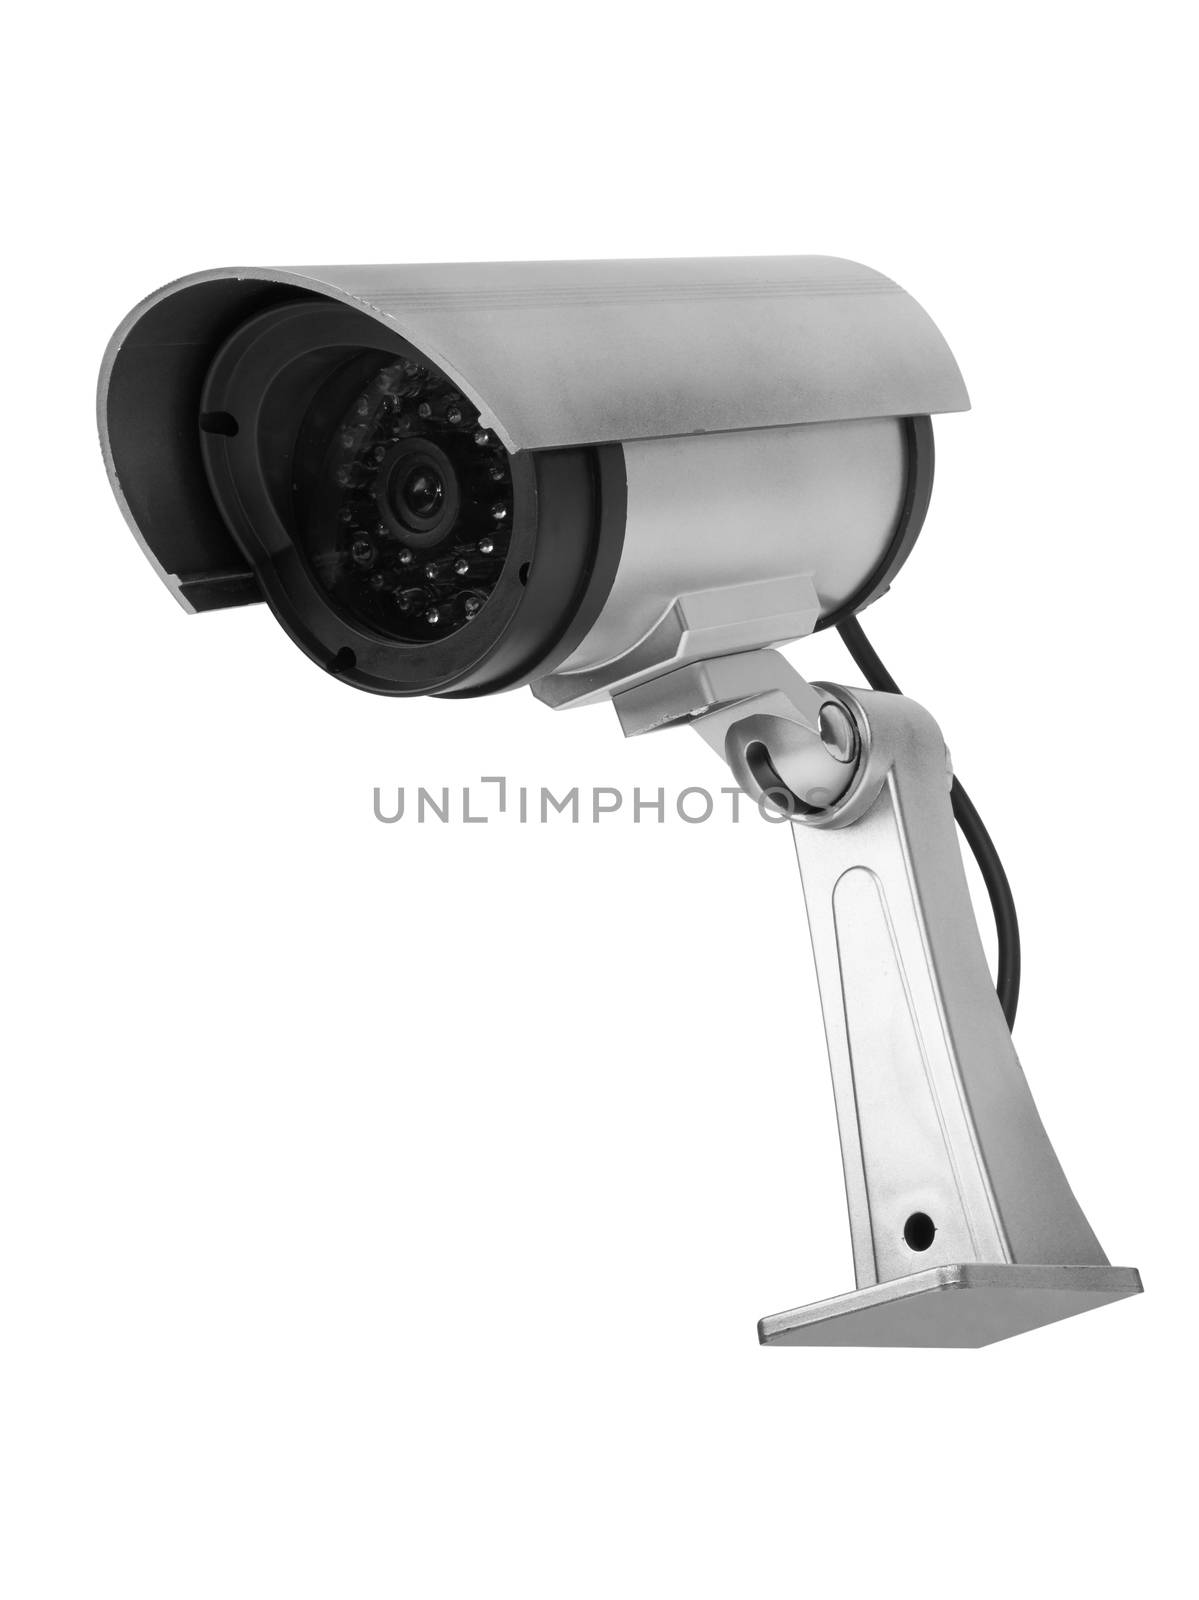 surveillance camera isolated on white background